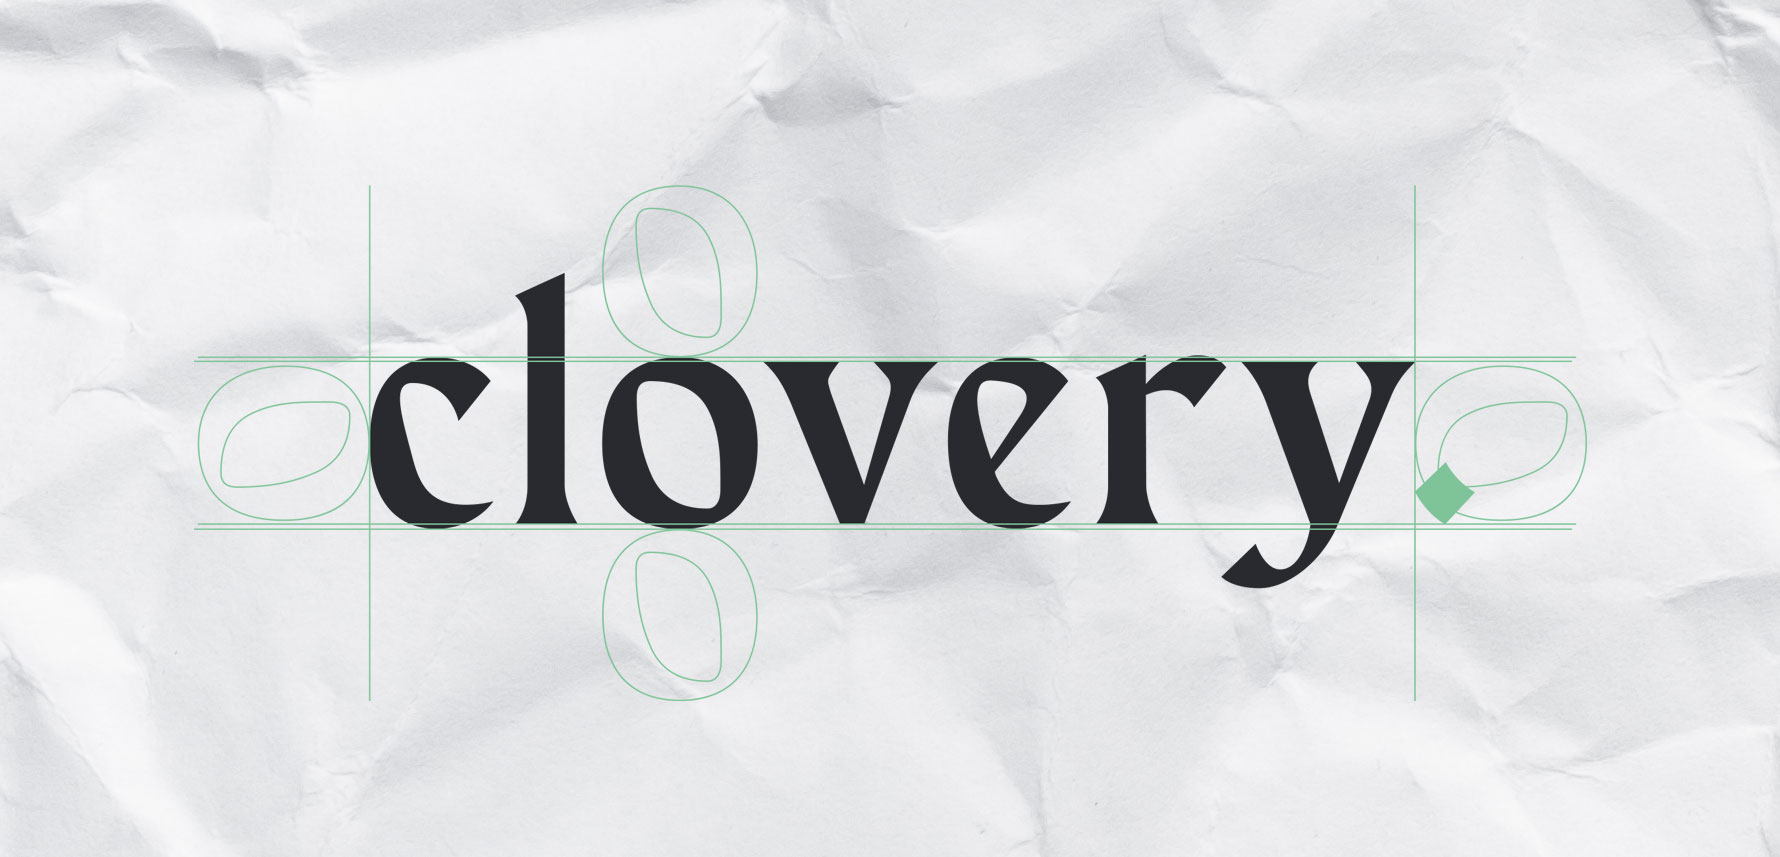 Hüfner Design | Referenz Clovery Business | Corporate Design | Logo